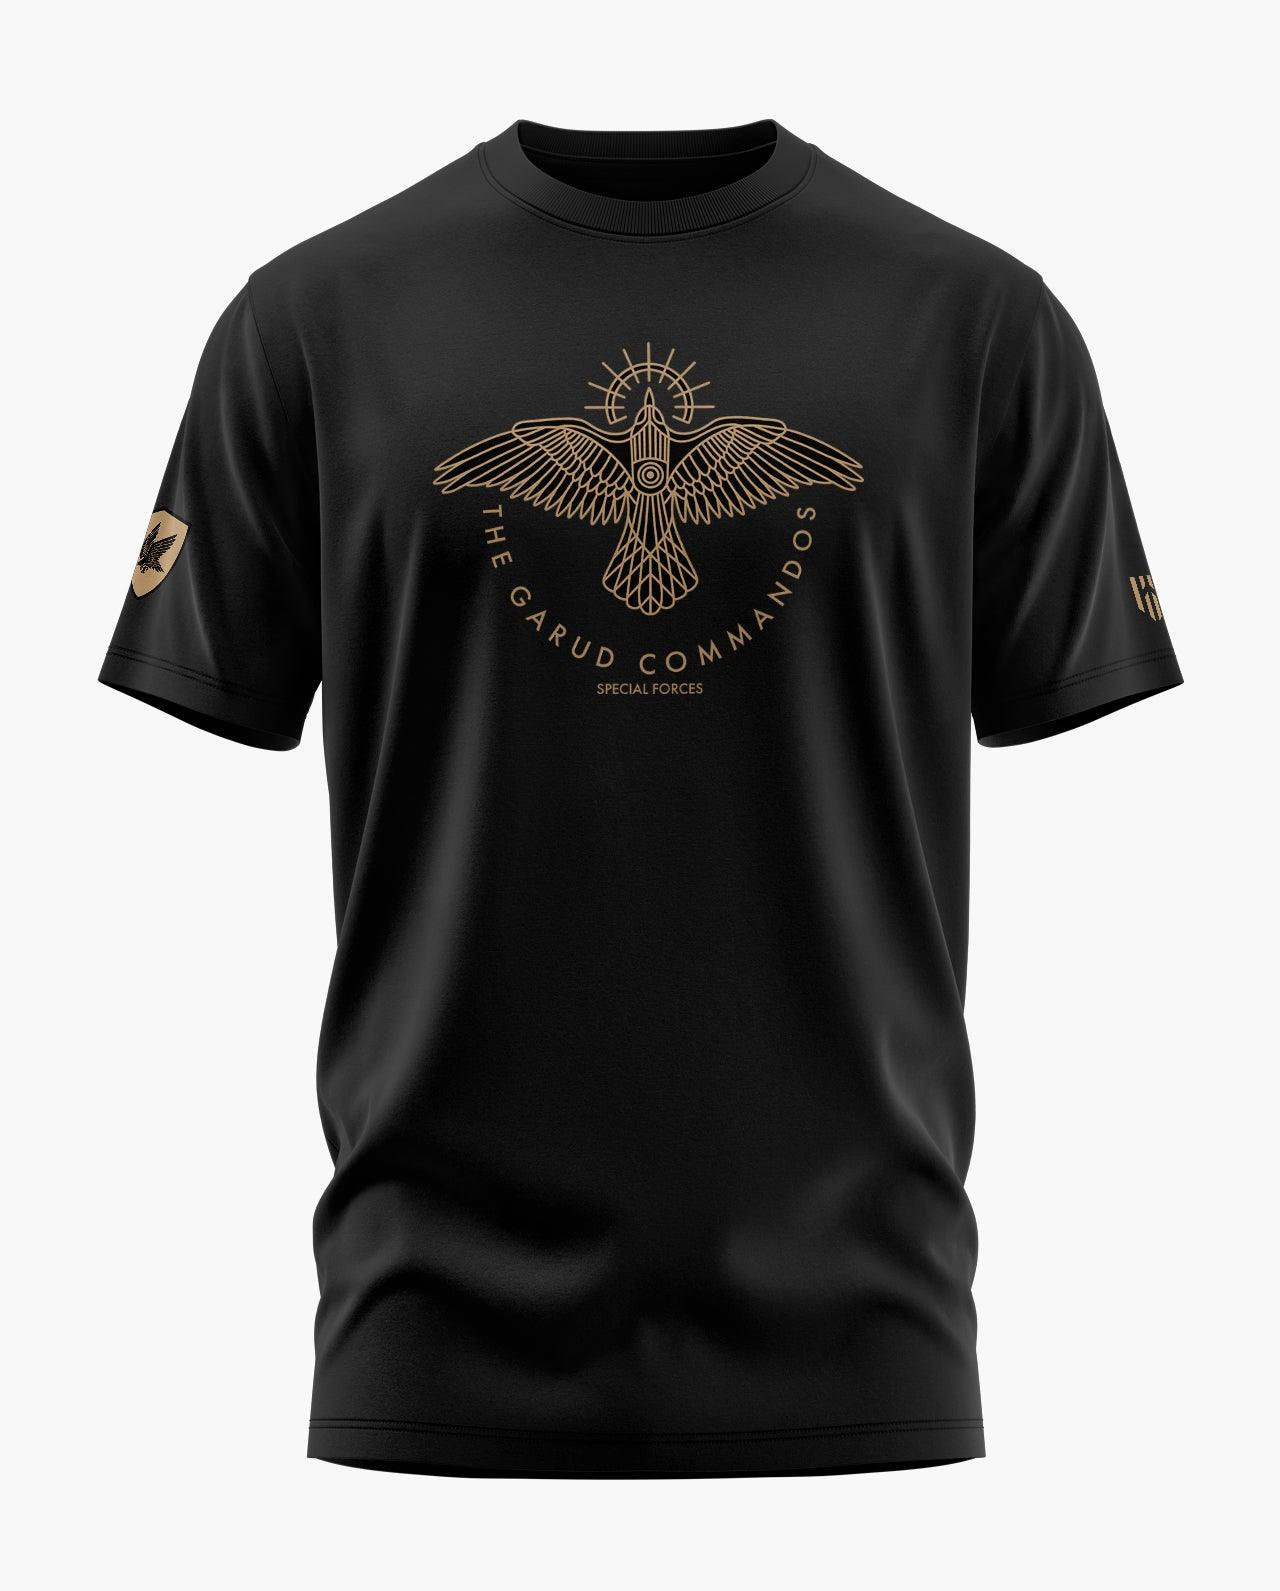 Garud Commando SF T-Shirt - Aero Armour